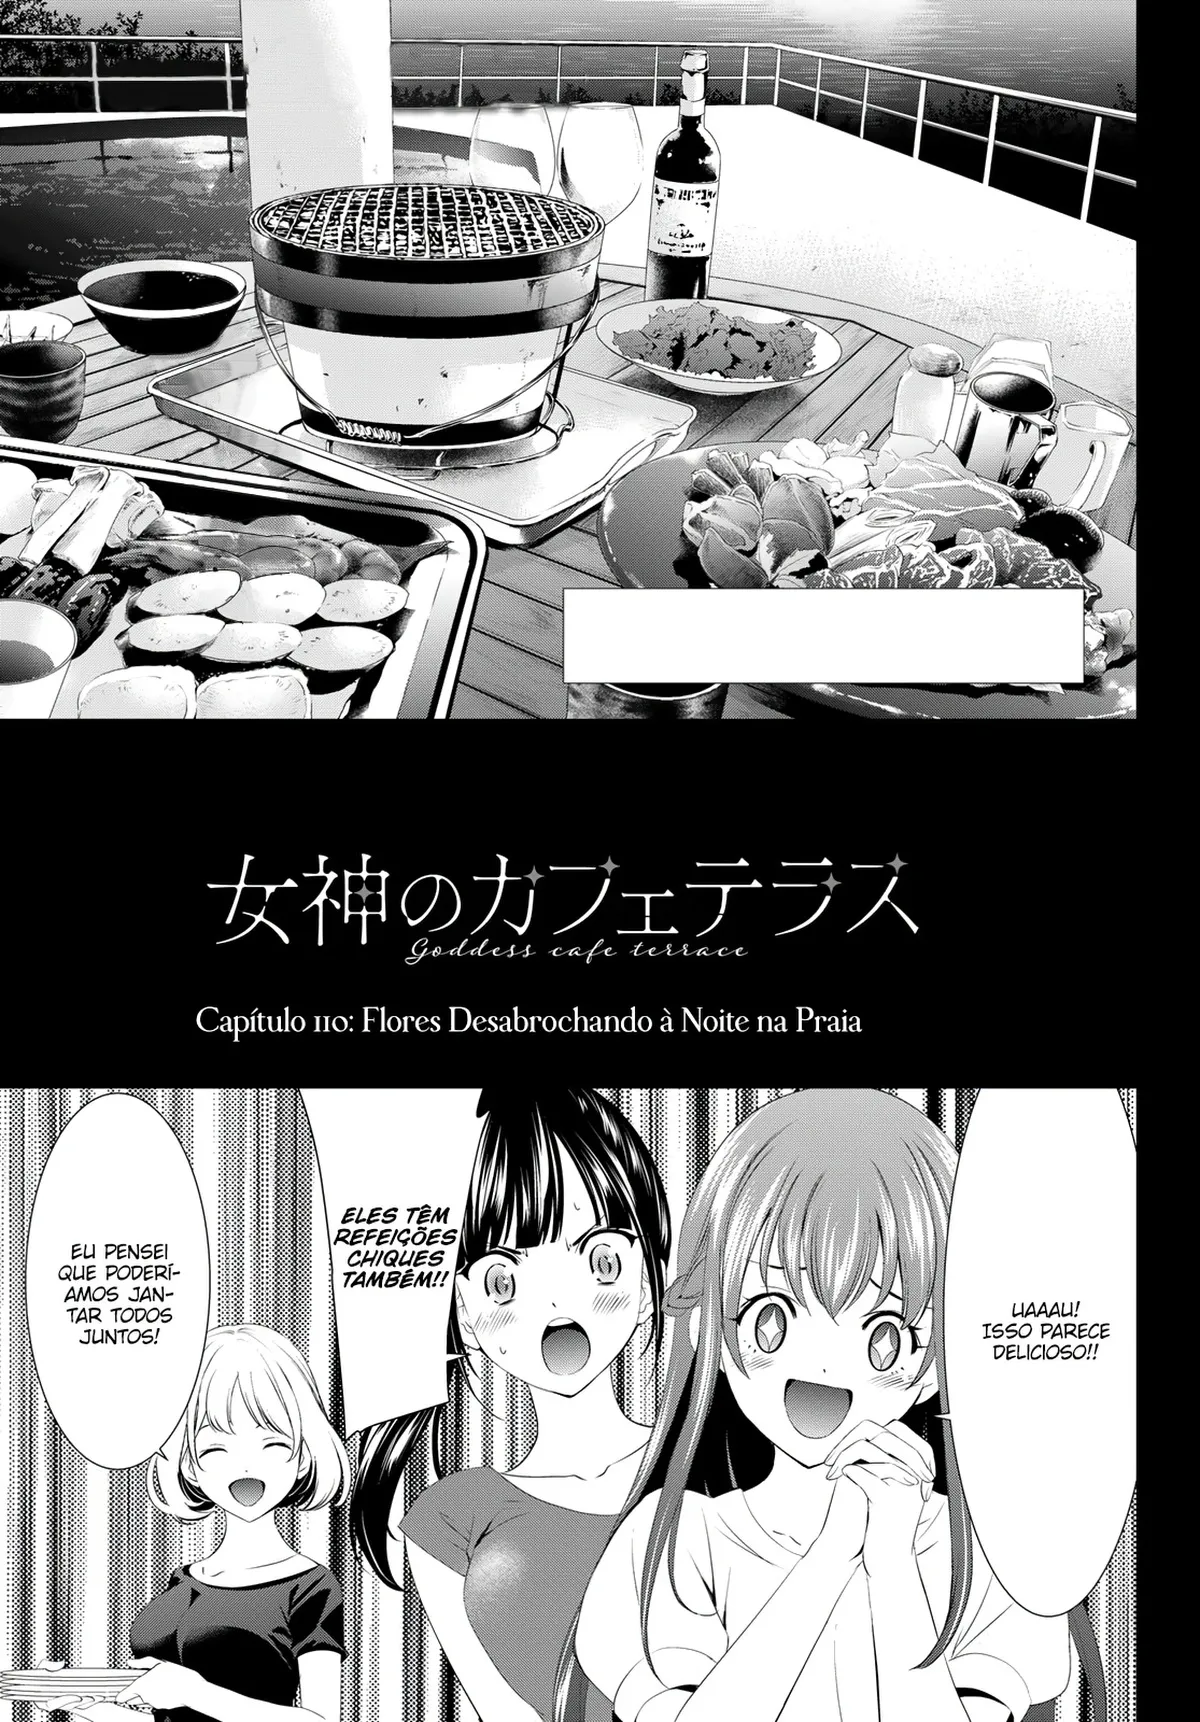 Megami no cafe terrace capítulo 119 — Manga en línea